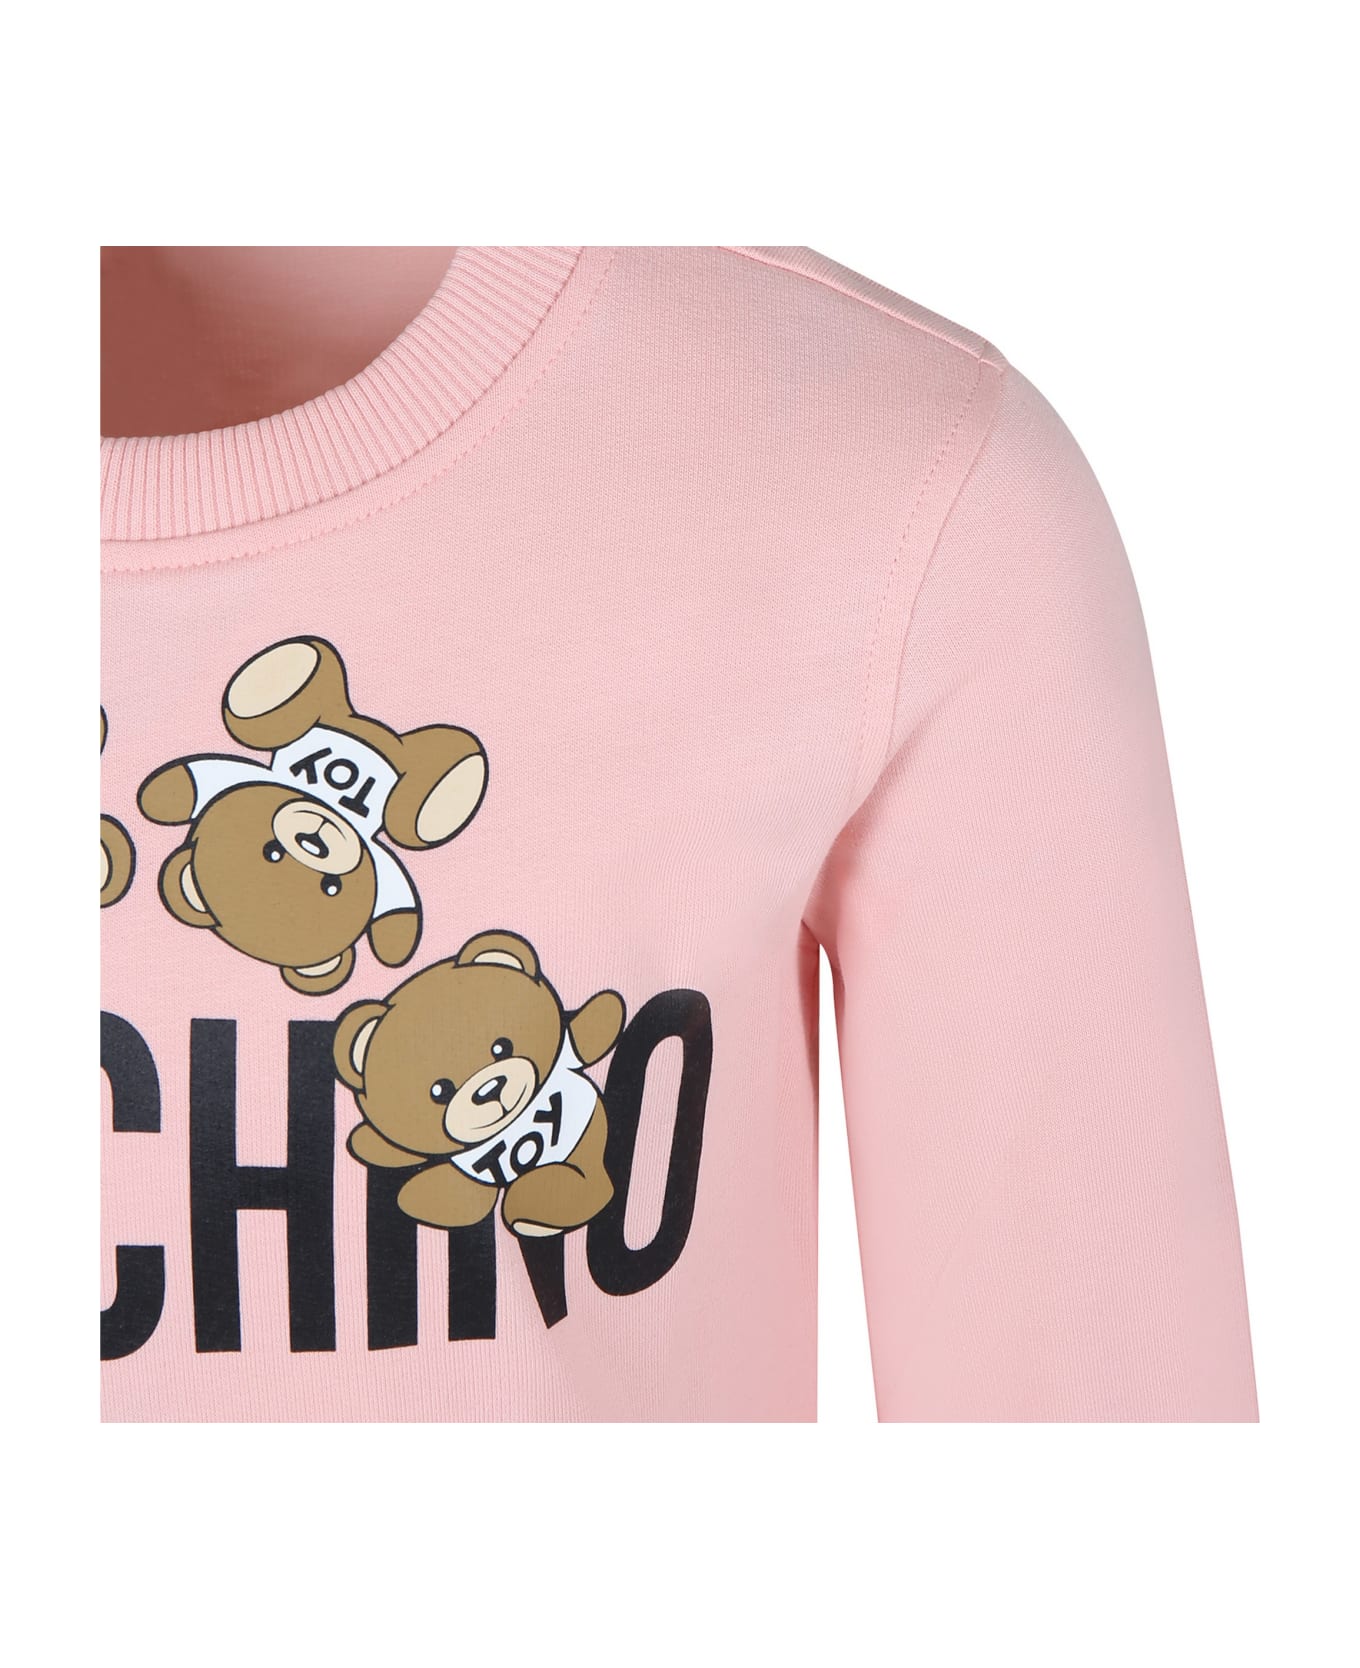 Moschino Pink Sweatshirt For Girl With Teddy Bear And Logo - Pink ニットウェア＆スウェットシャツ